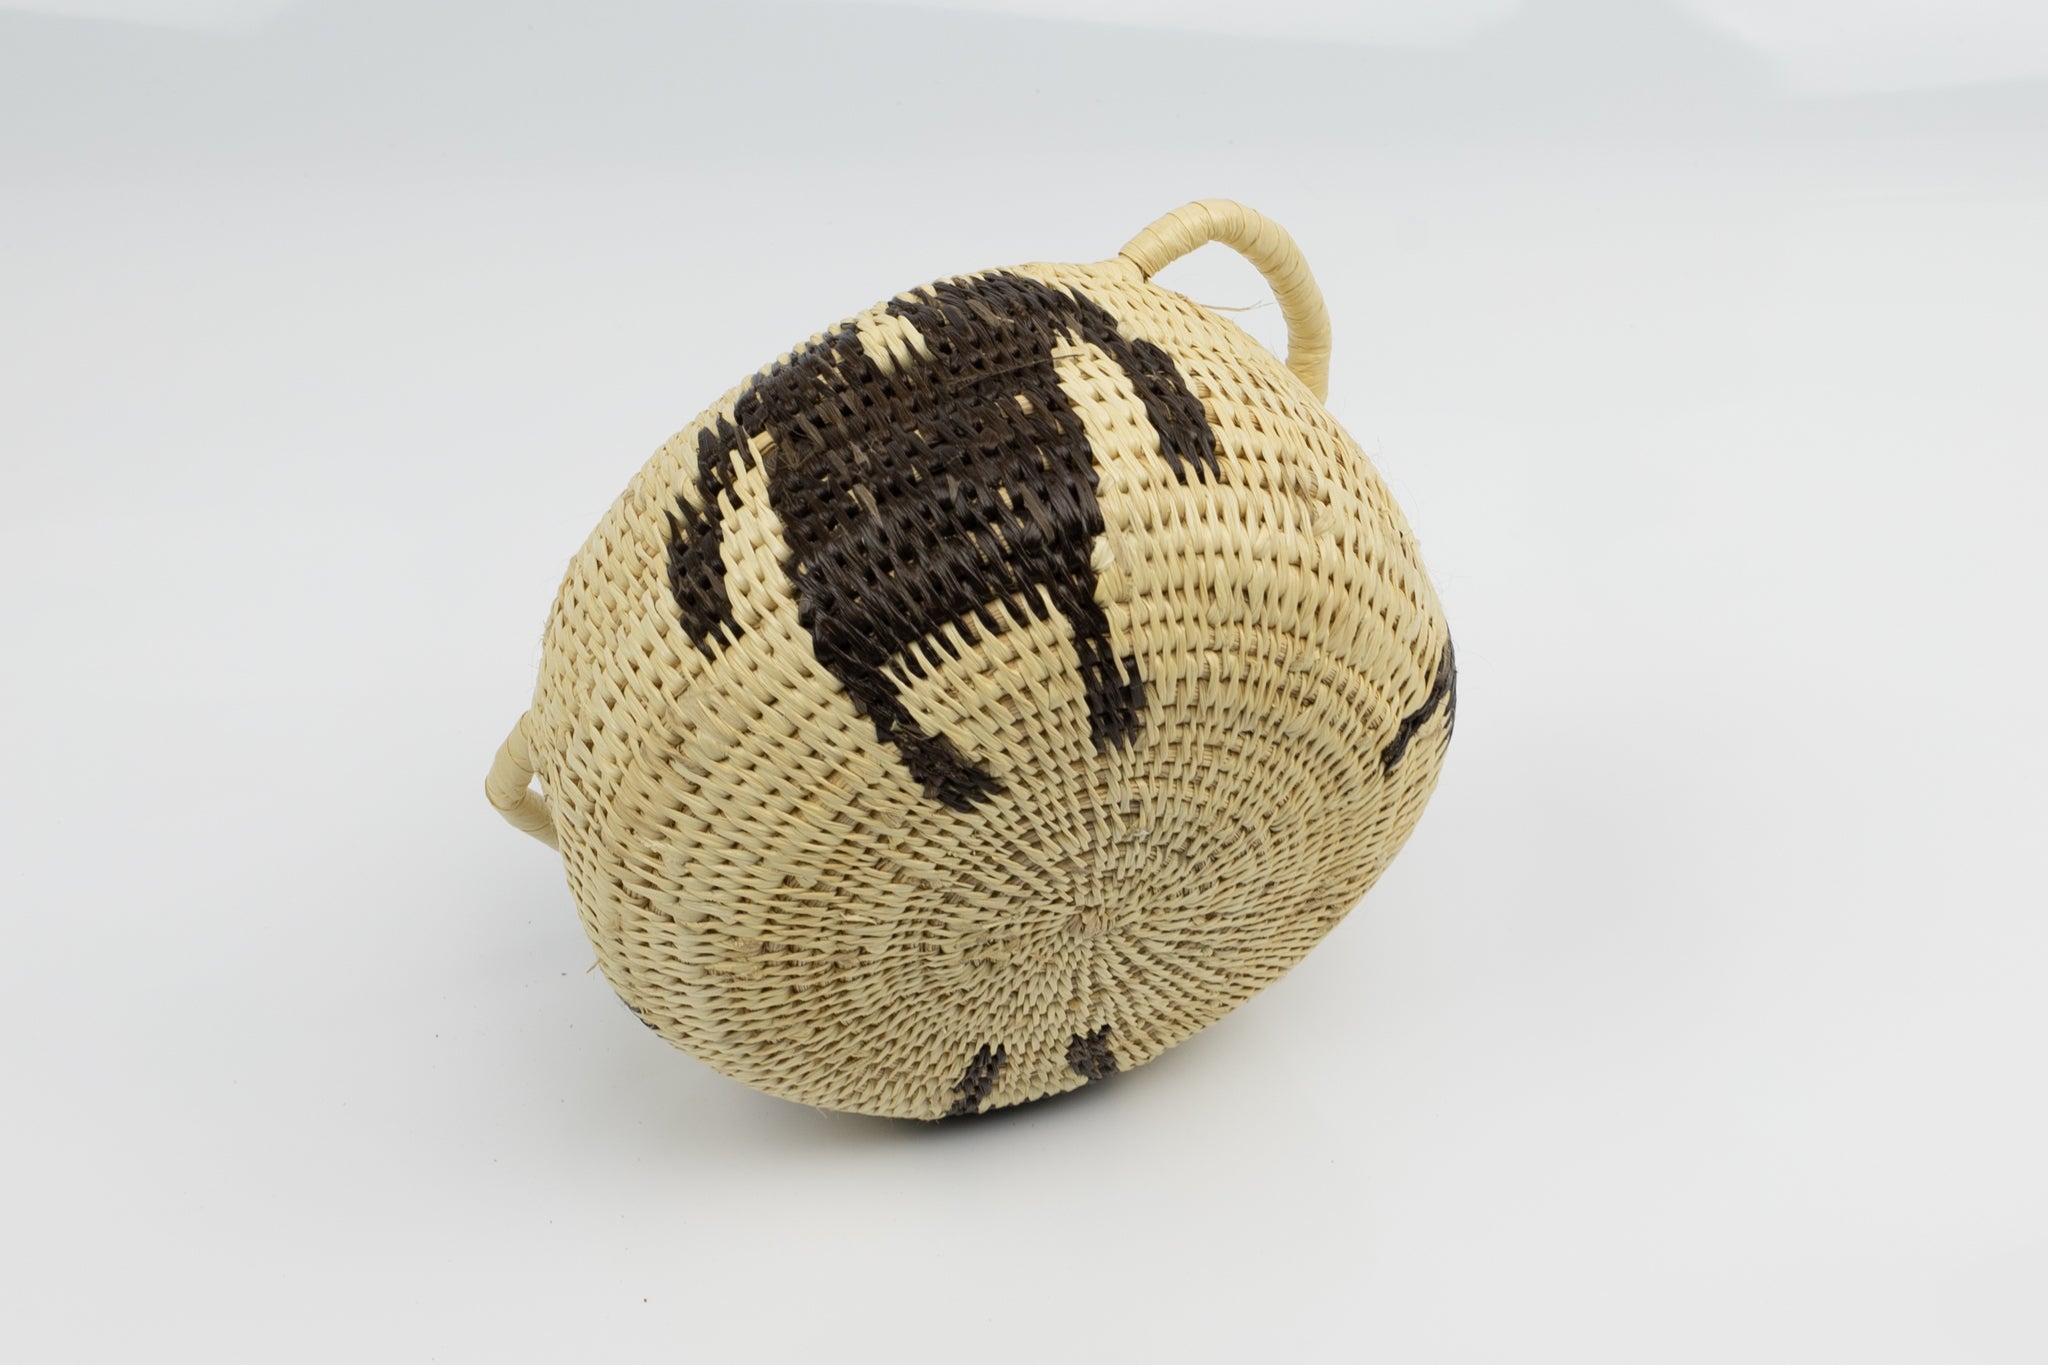 Vintage Handmade Human Figure Woven Basket With Handles Fair Trade